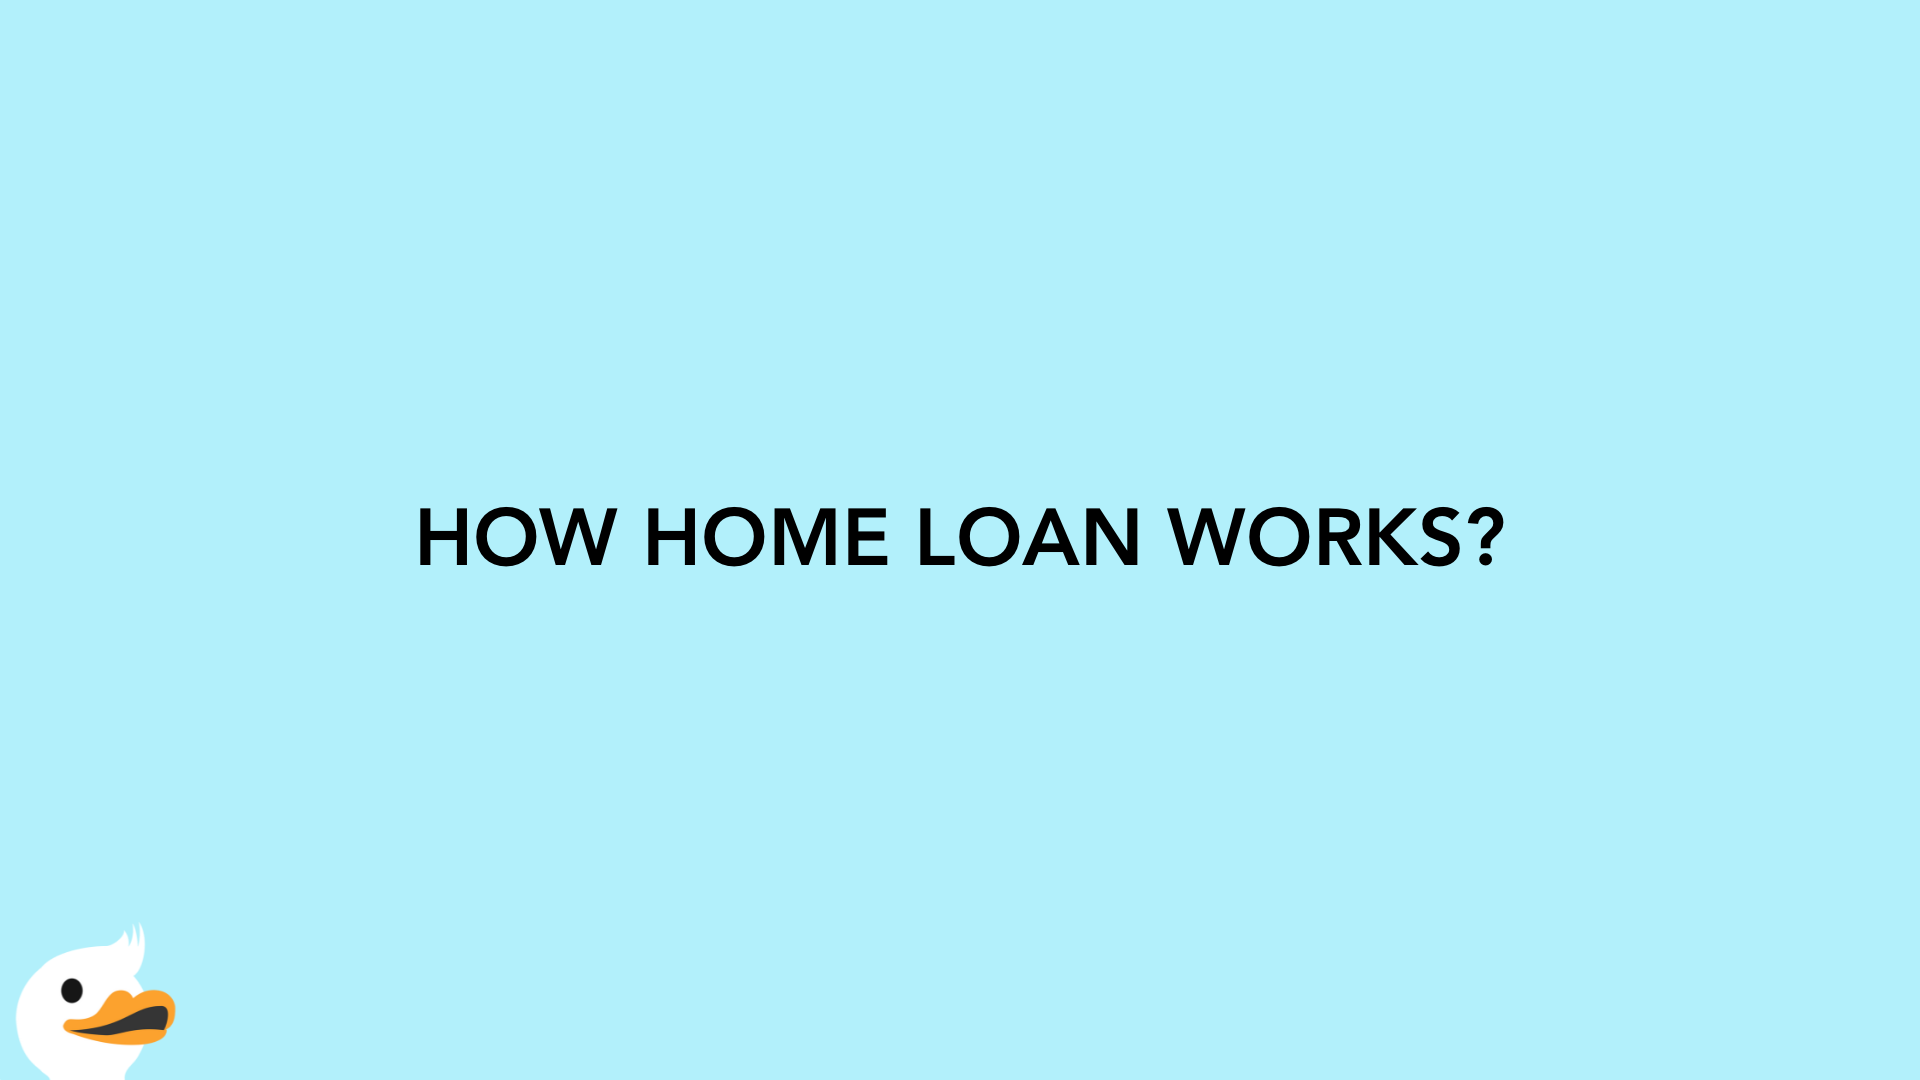 HOW HOME LOAN WORKS?